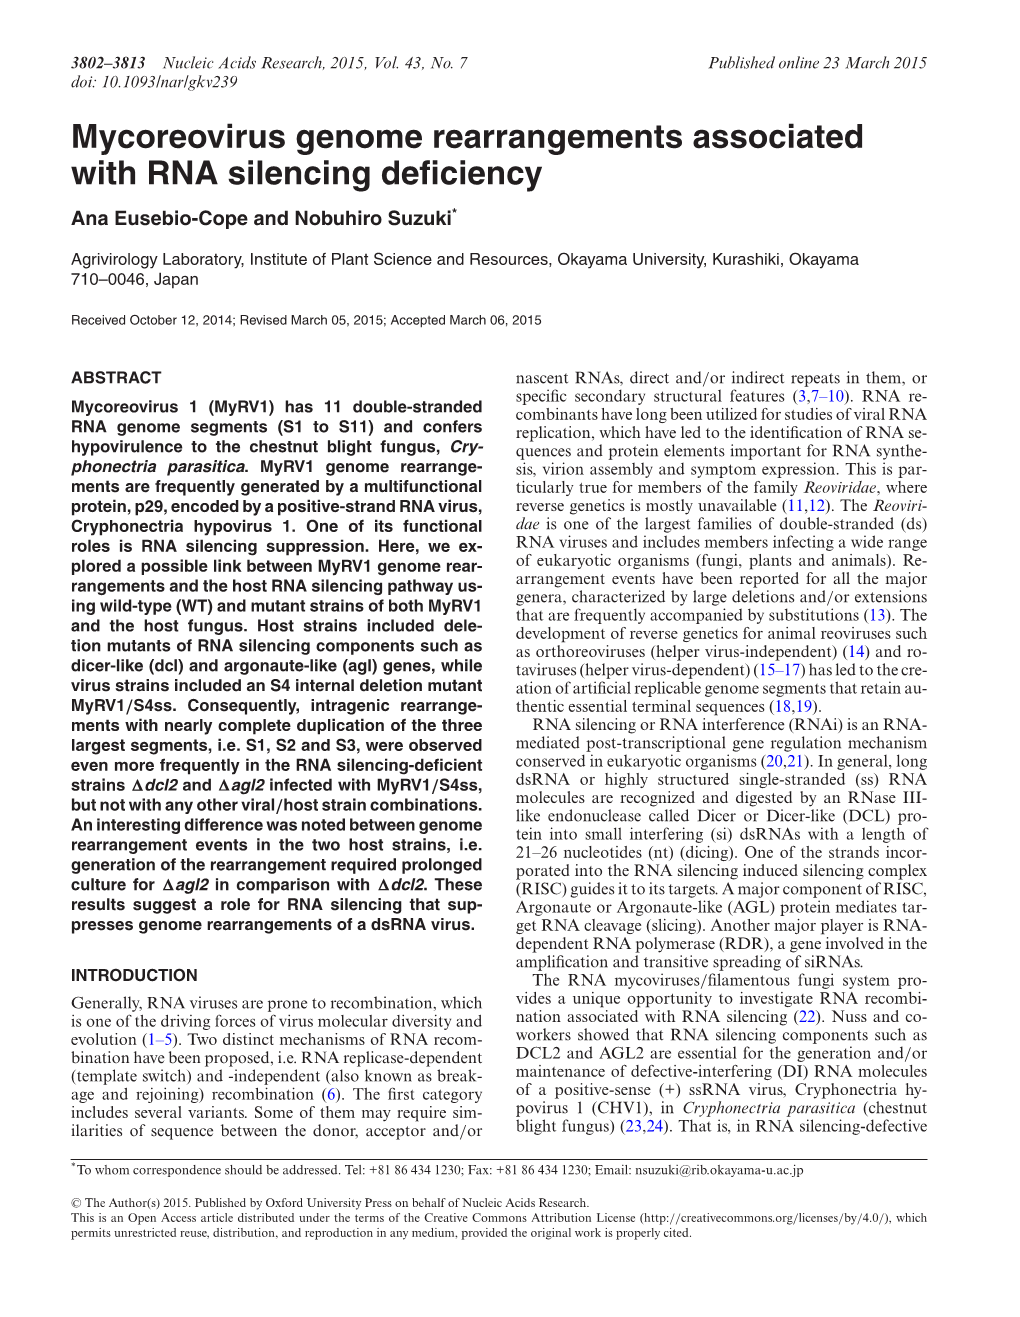 Mycoreovirus Genome Rearrangements Associated with RNA Silencing Deﬁciency Ana Eusebio-Cope and Nobuhiro Suzuki*